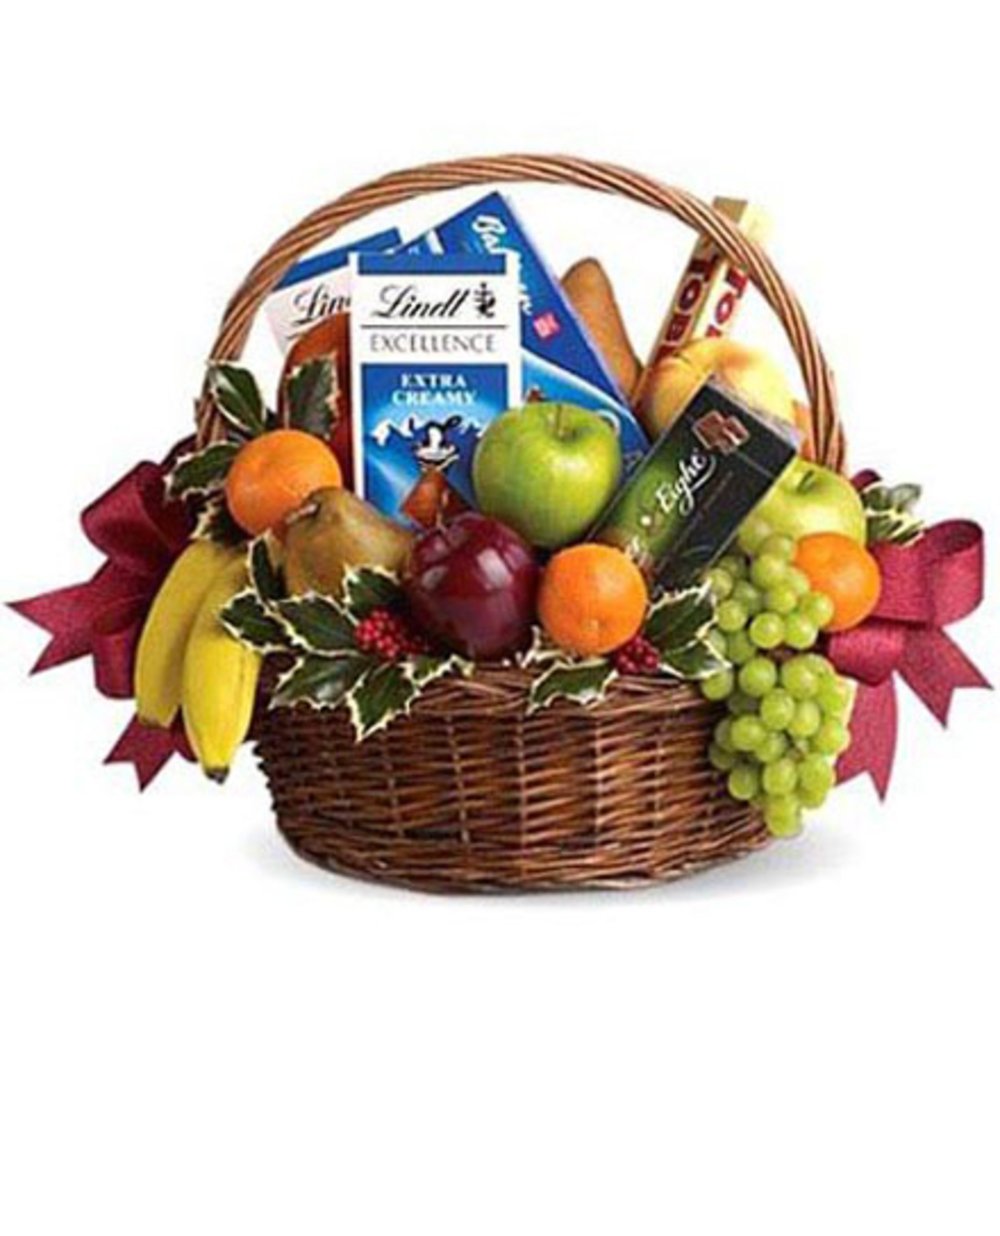 Adorable Fruit & Chocolate Basket